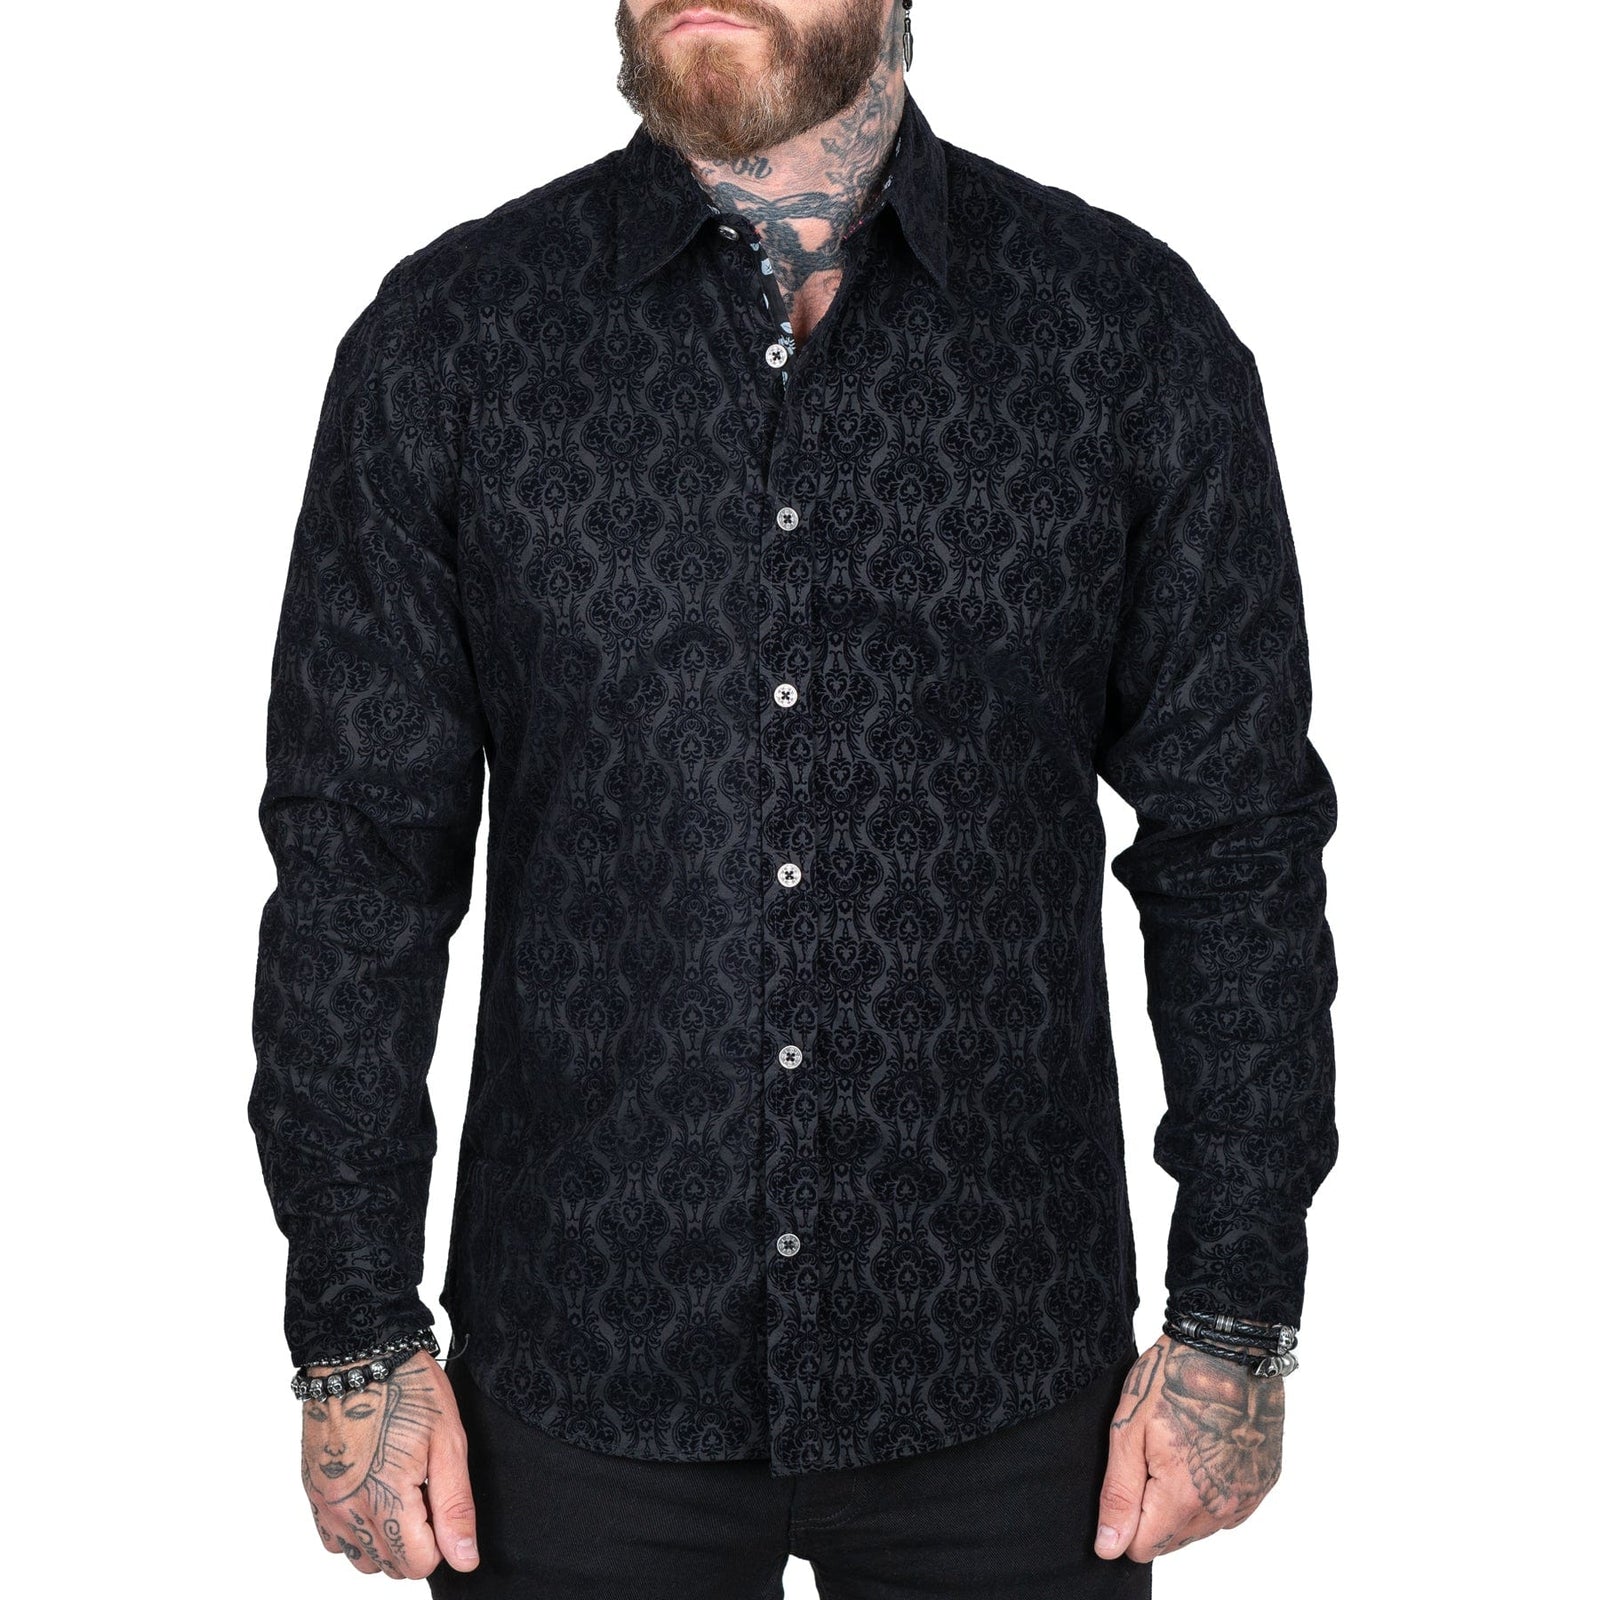 Wornstar Clothing Mens Long Sleeve Shirt. Amaryllis Black Button Down Shirt.